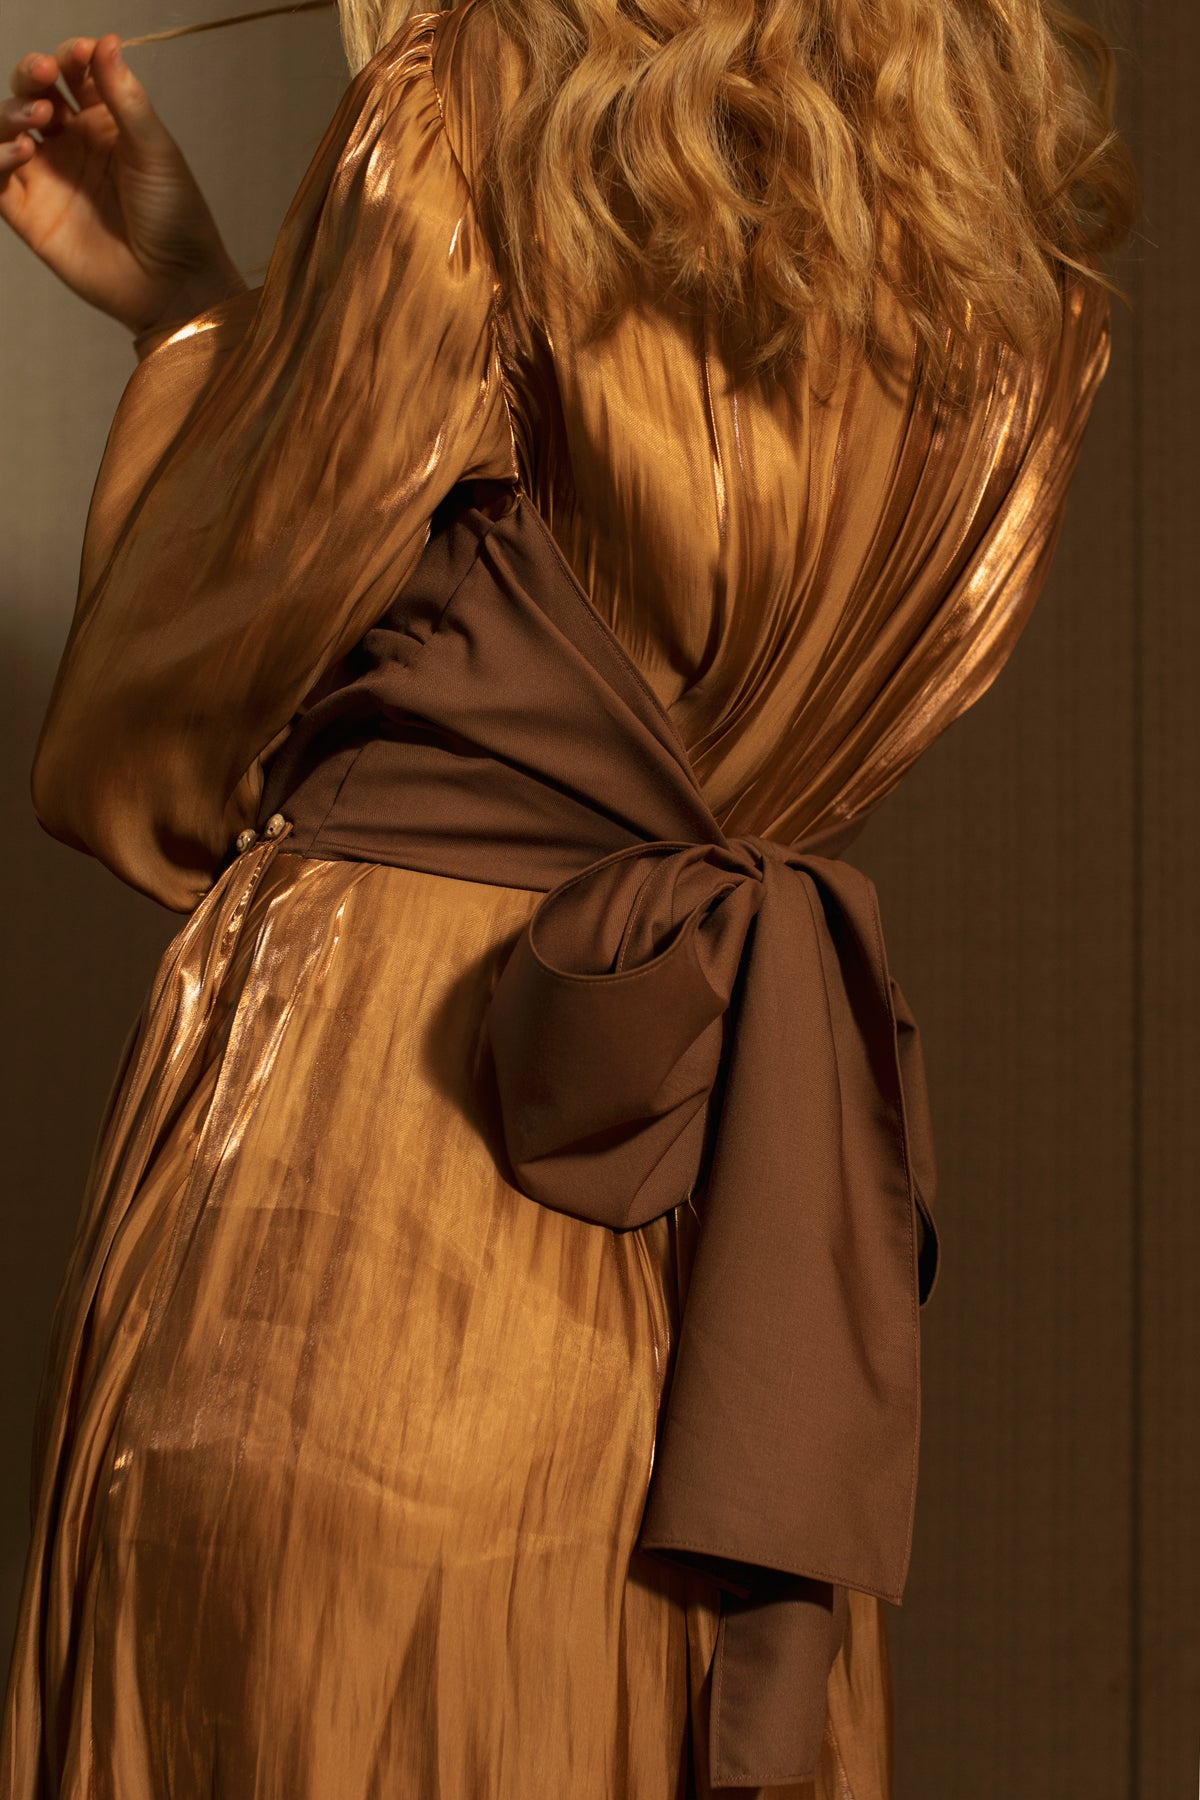 Winifred Corset Dress in Copper